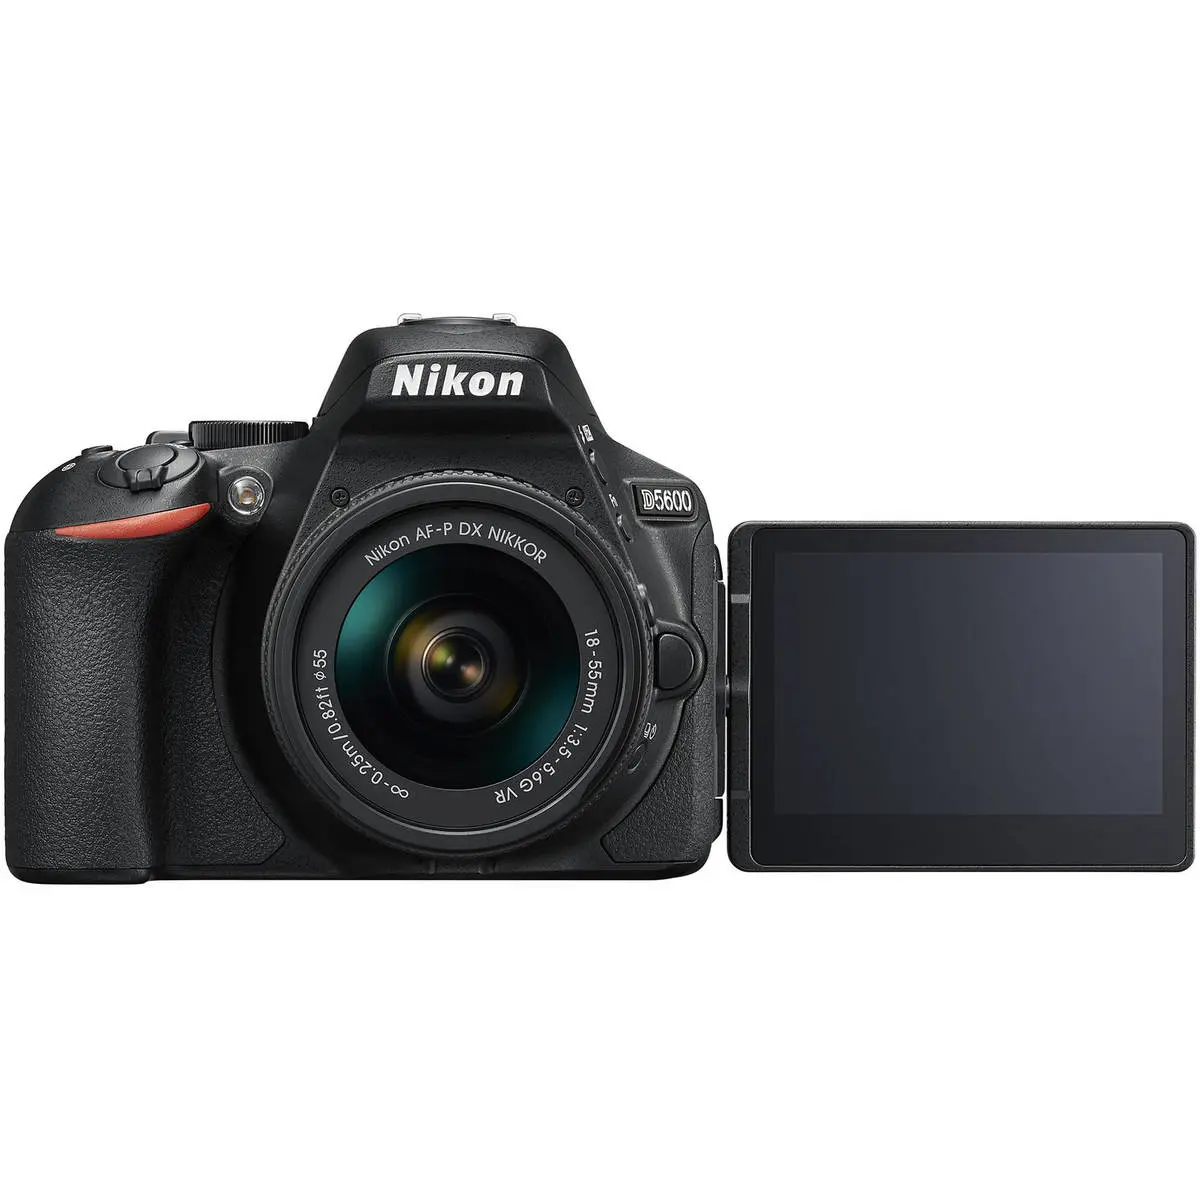 6. Nikon D5600 AF-P 18-55 VR Kit WiFi NFC FullHD 24.2MP Camera Black